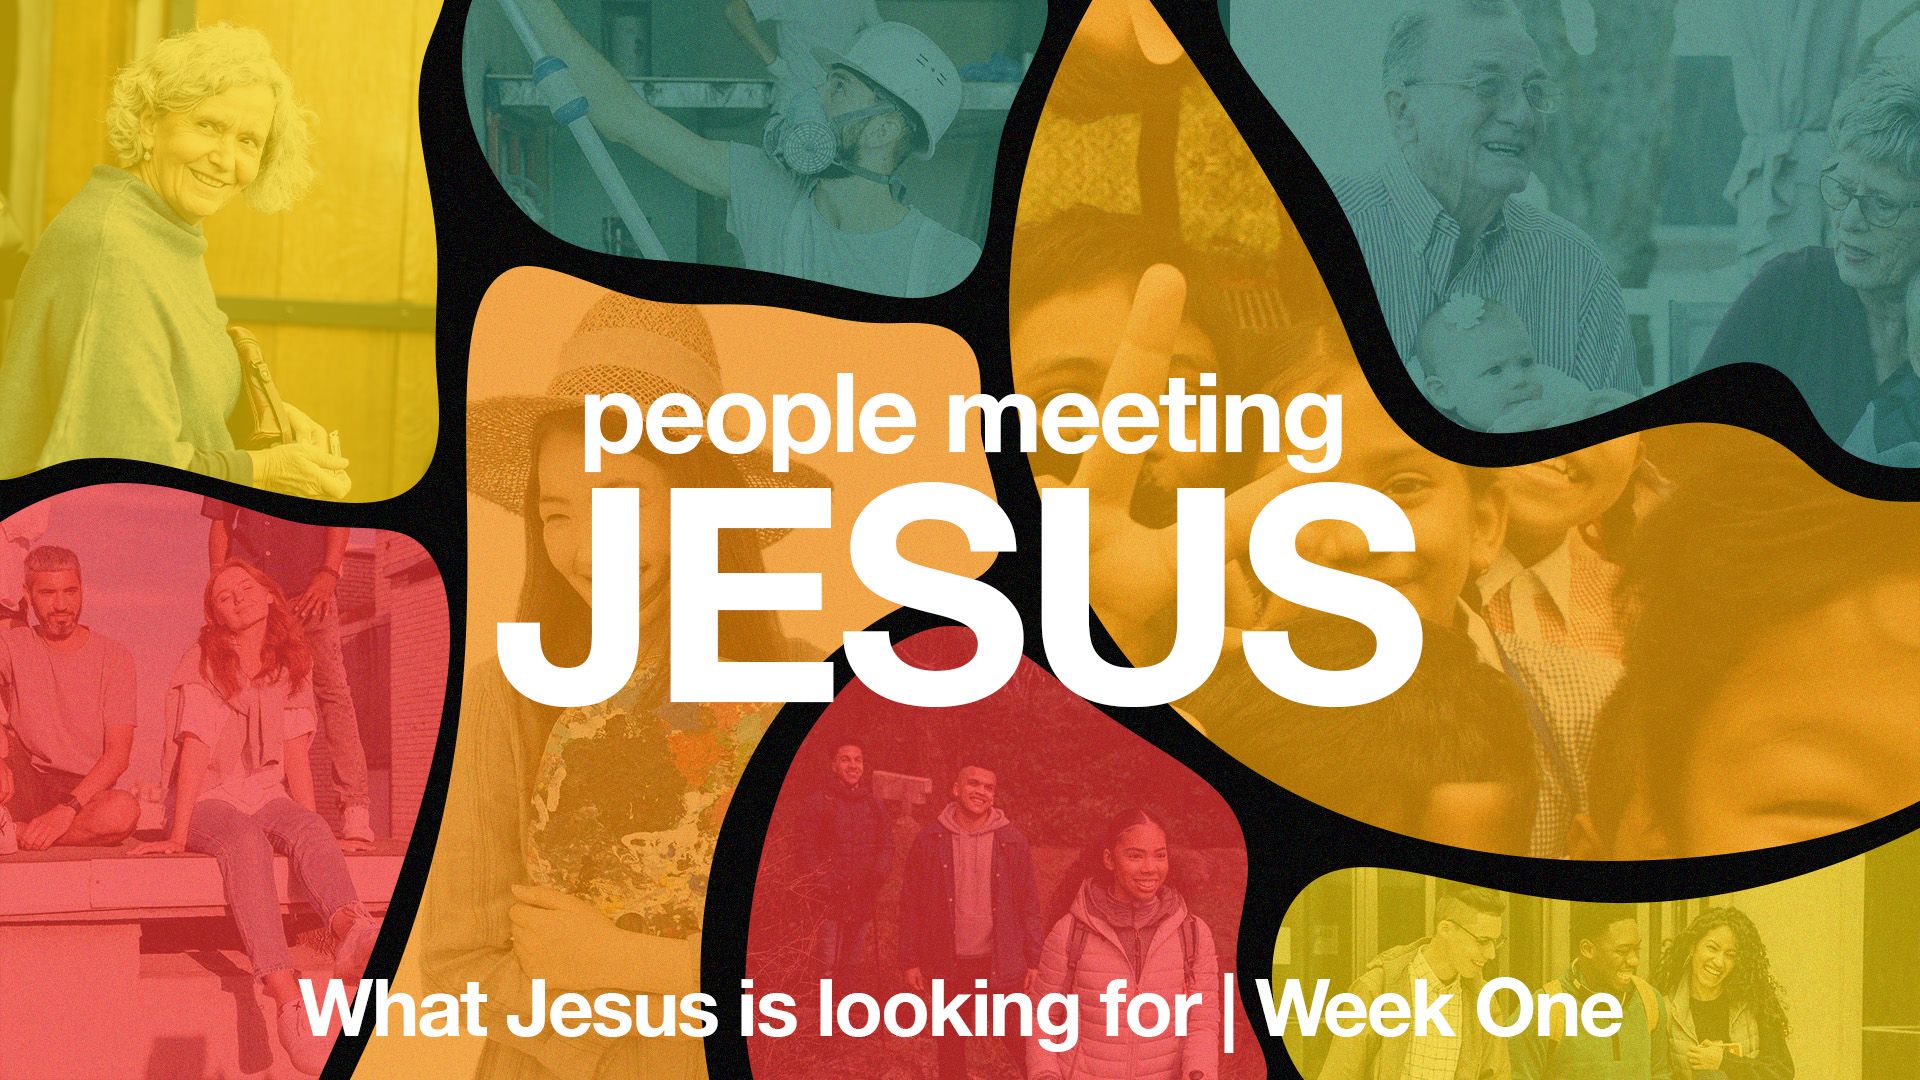 What Jesus is looking for - Week One